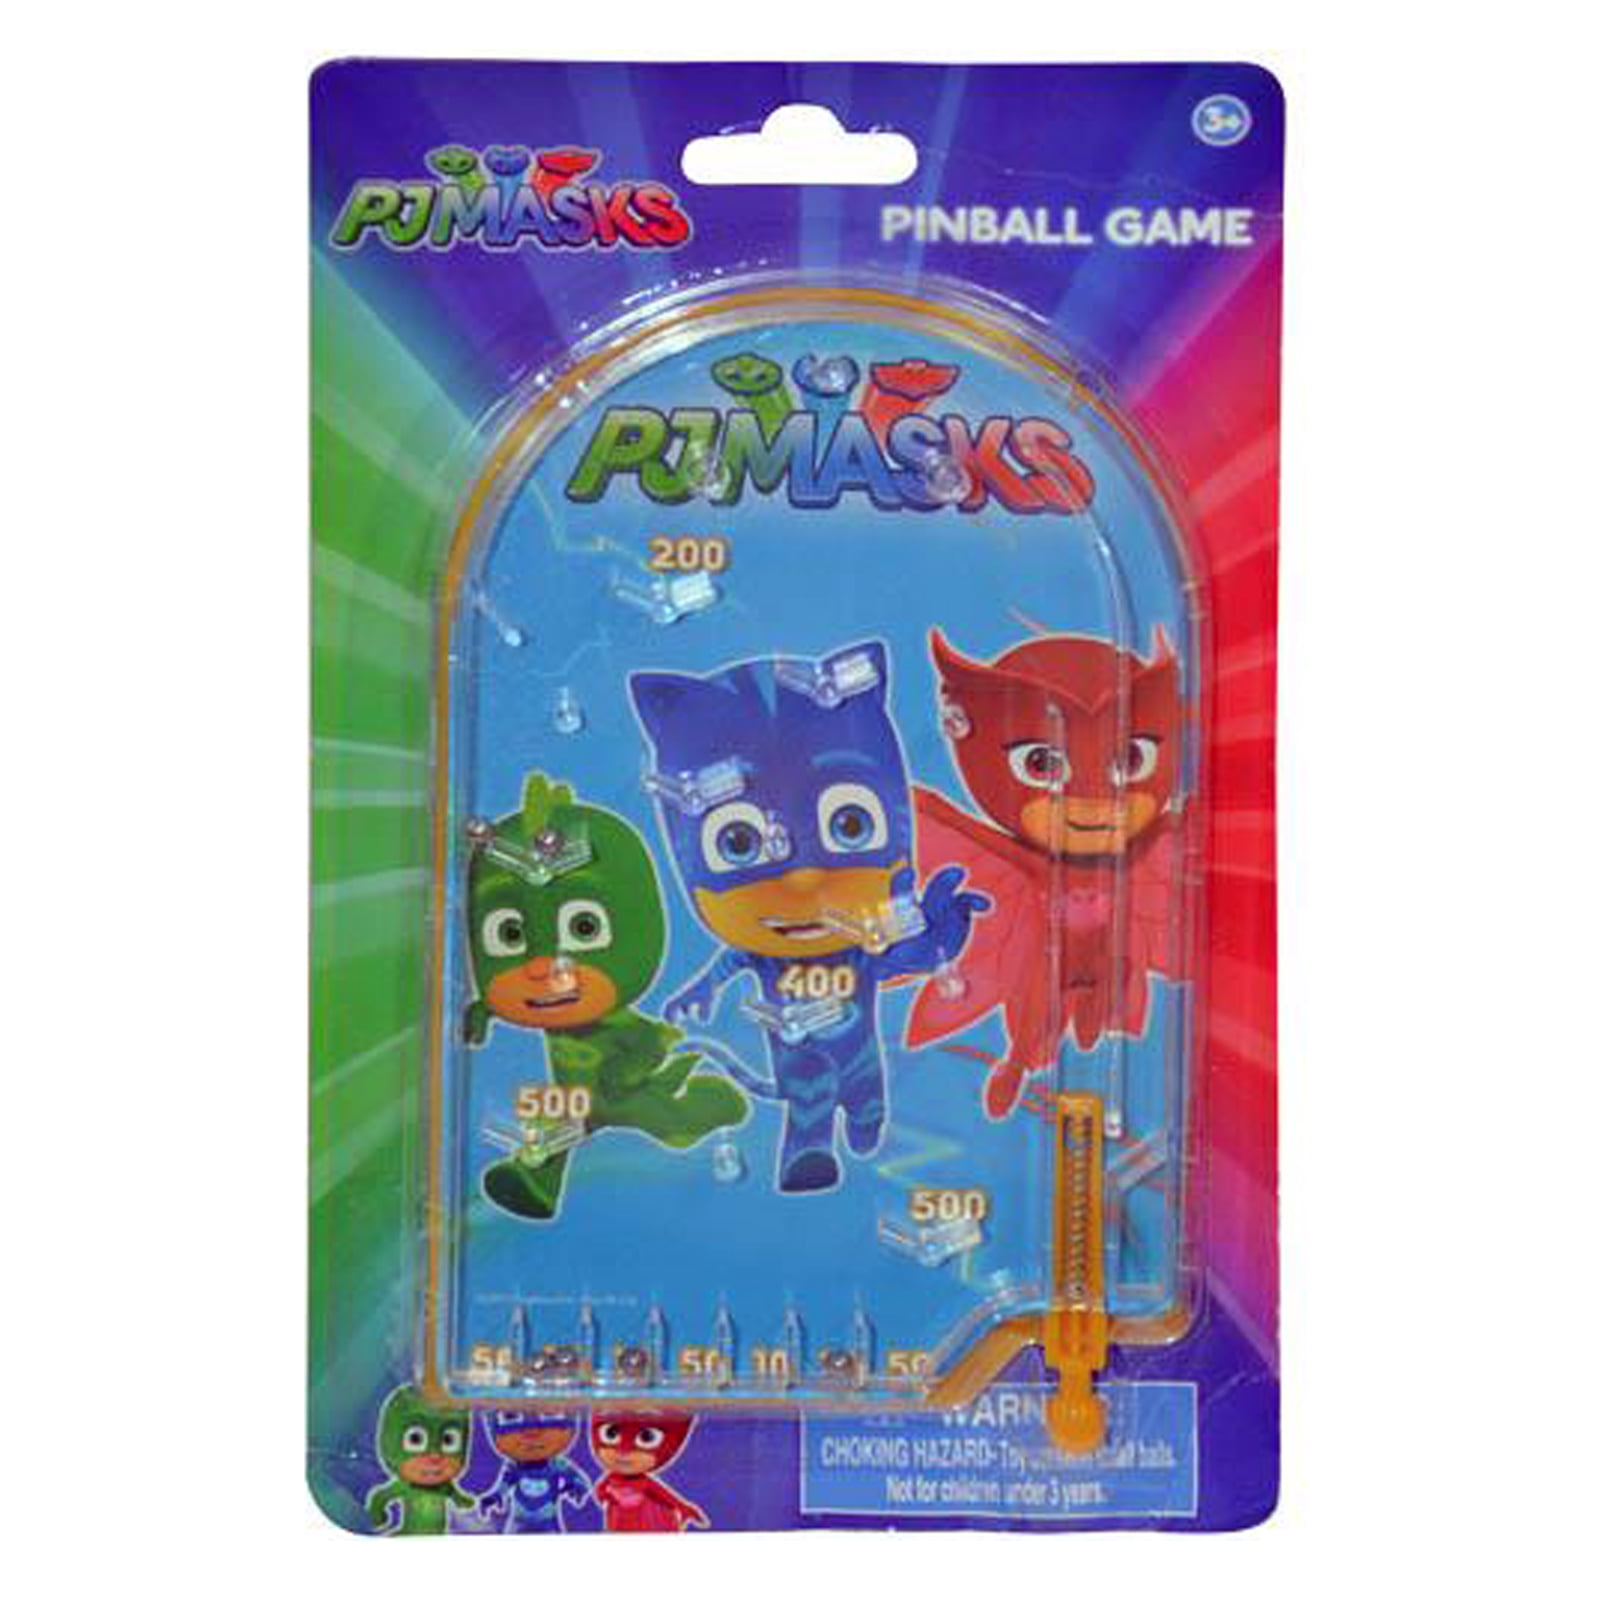 KidPlay Products Nickelodeon Paw Patrol Boys Handheld Pinball Game Travel Toy Stocking Stuffer 